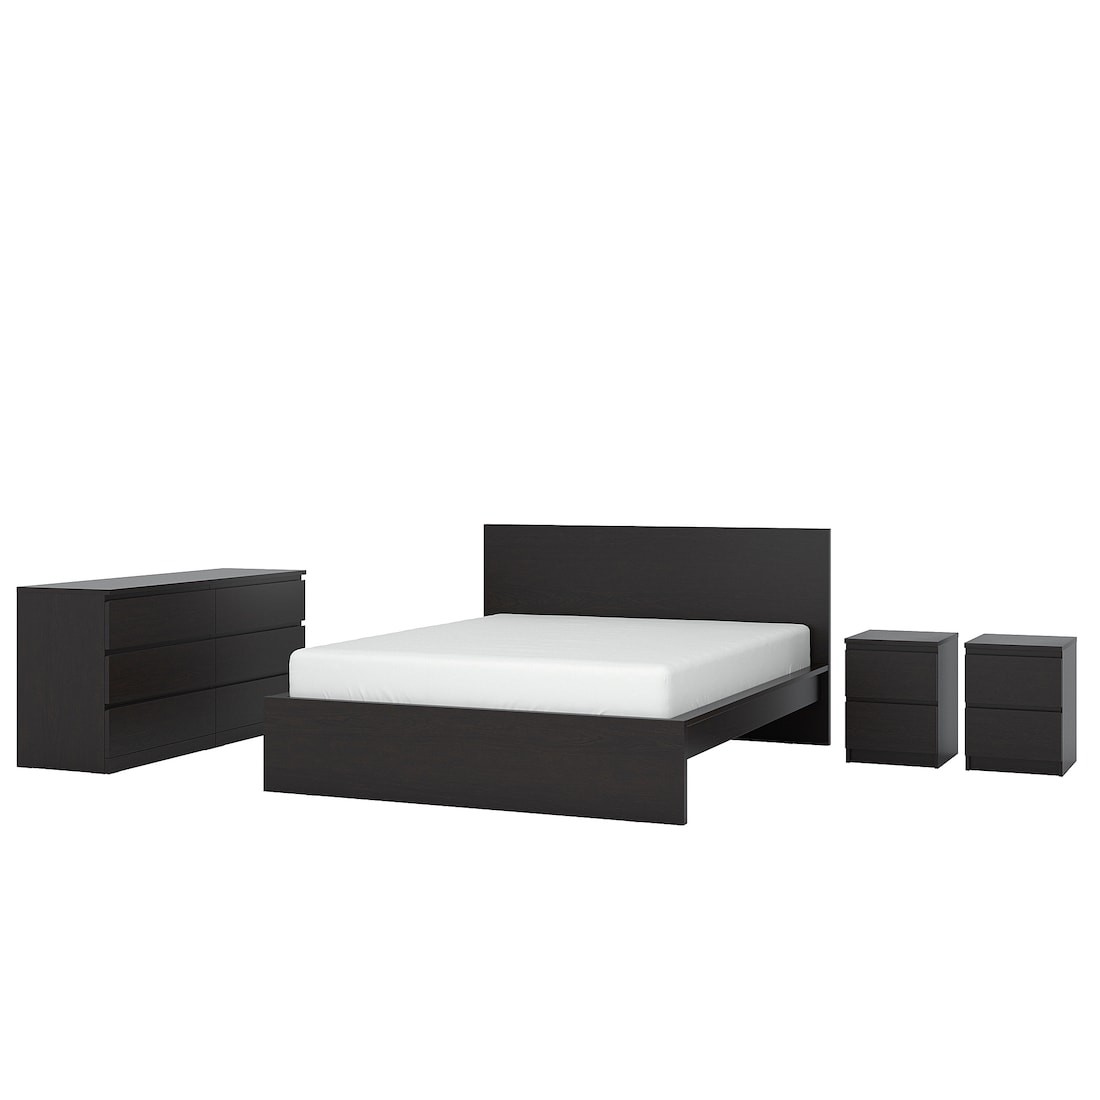 MALM МАЛЬМ Набор мебели для спальни 4 шт, черно-коричневый, 160x200 см